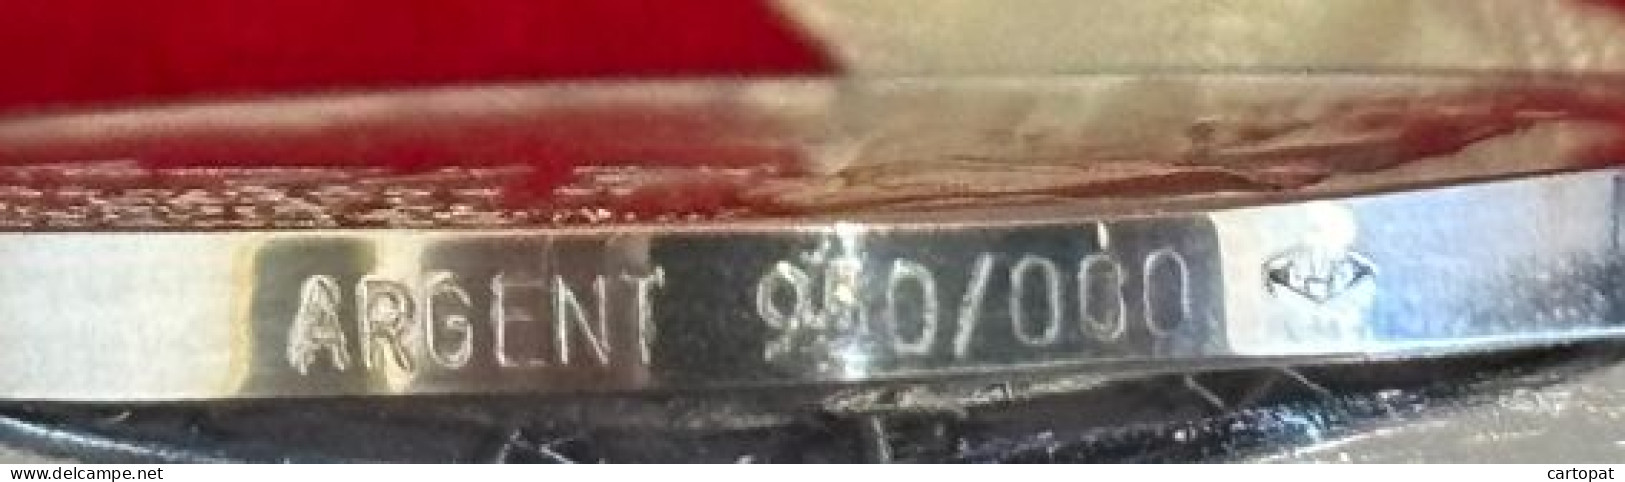 MEDAILLE COMMEMORATIVE DE JOHN KENNEDY EN AGENT 950/1000 DIAMETRE 39MM RARE! - Royal/Of Nobility